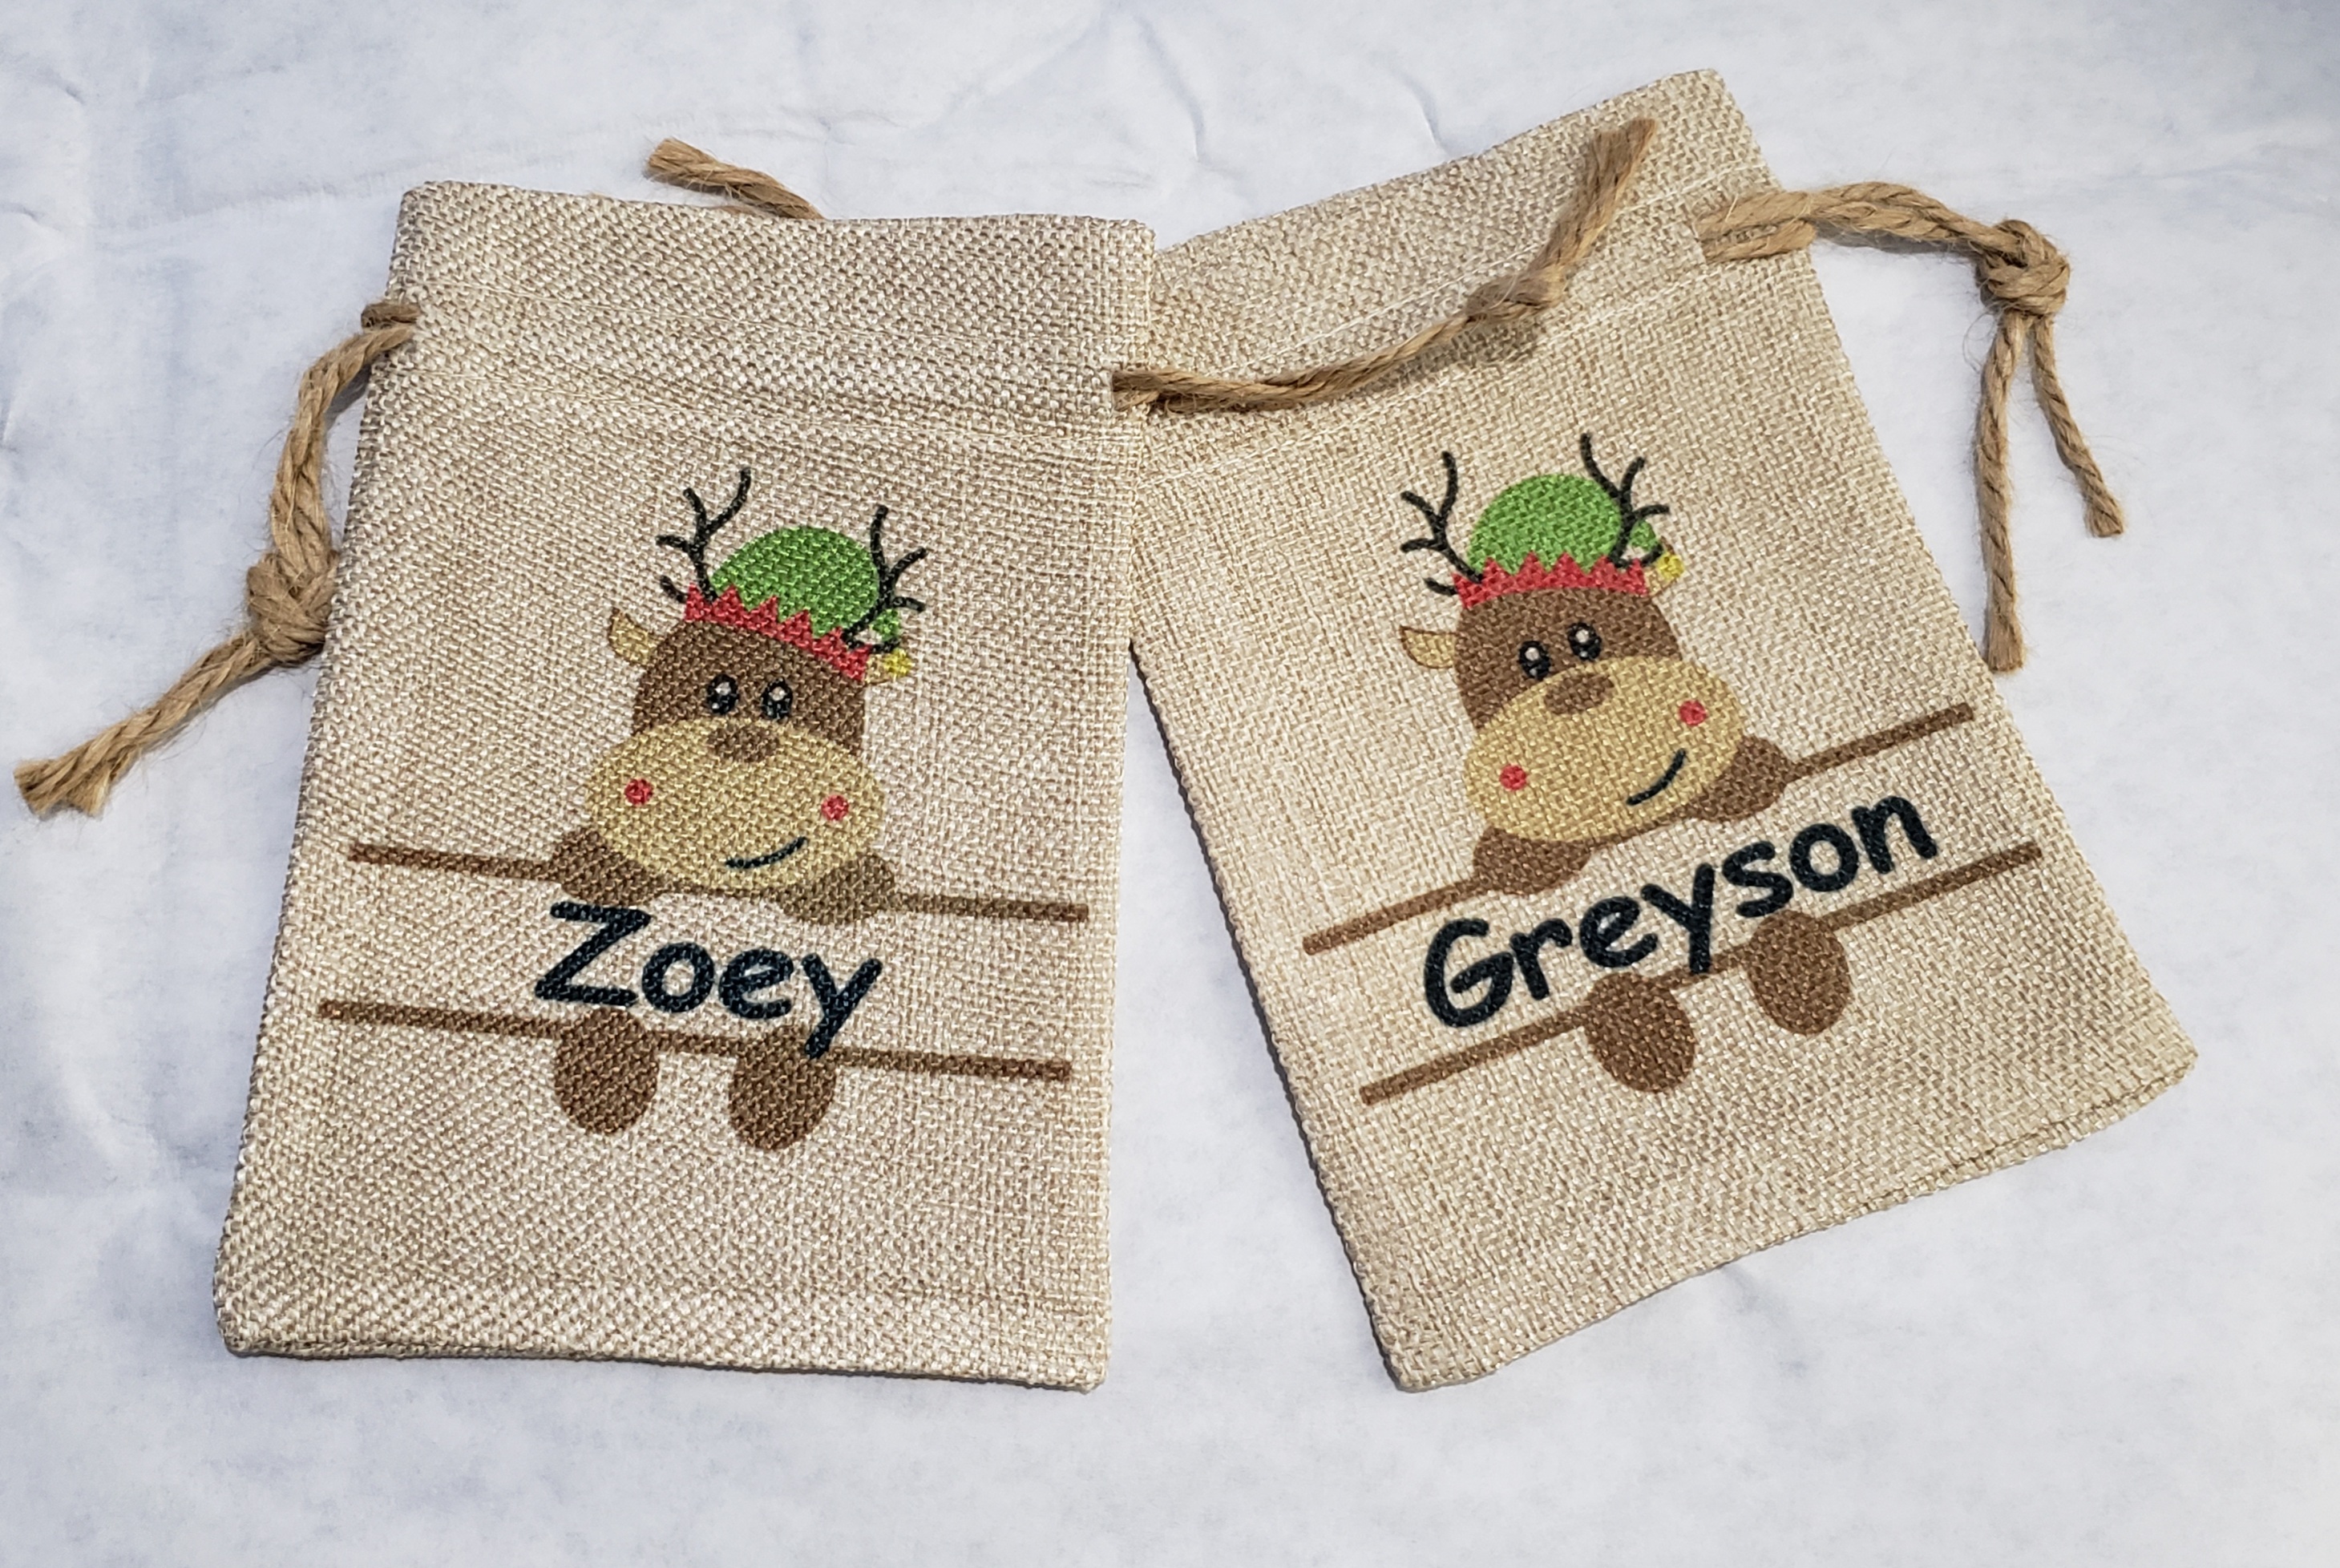 Christmas goodie bag made with sublimation printing